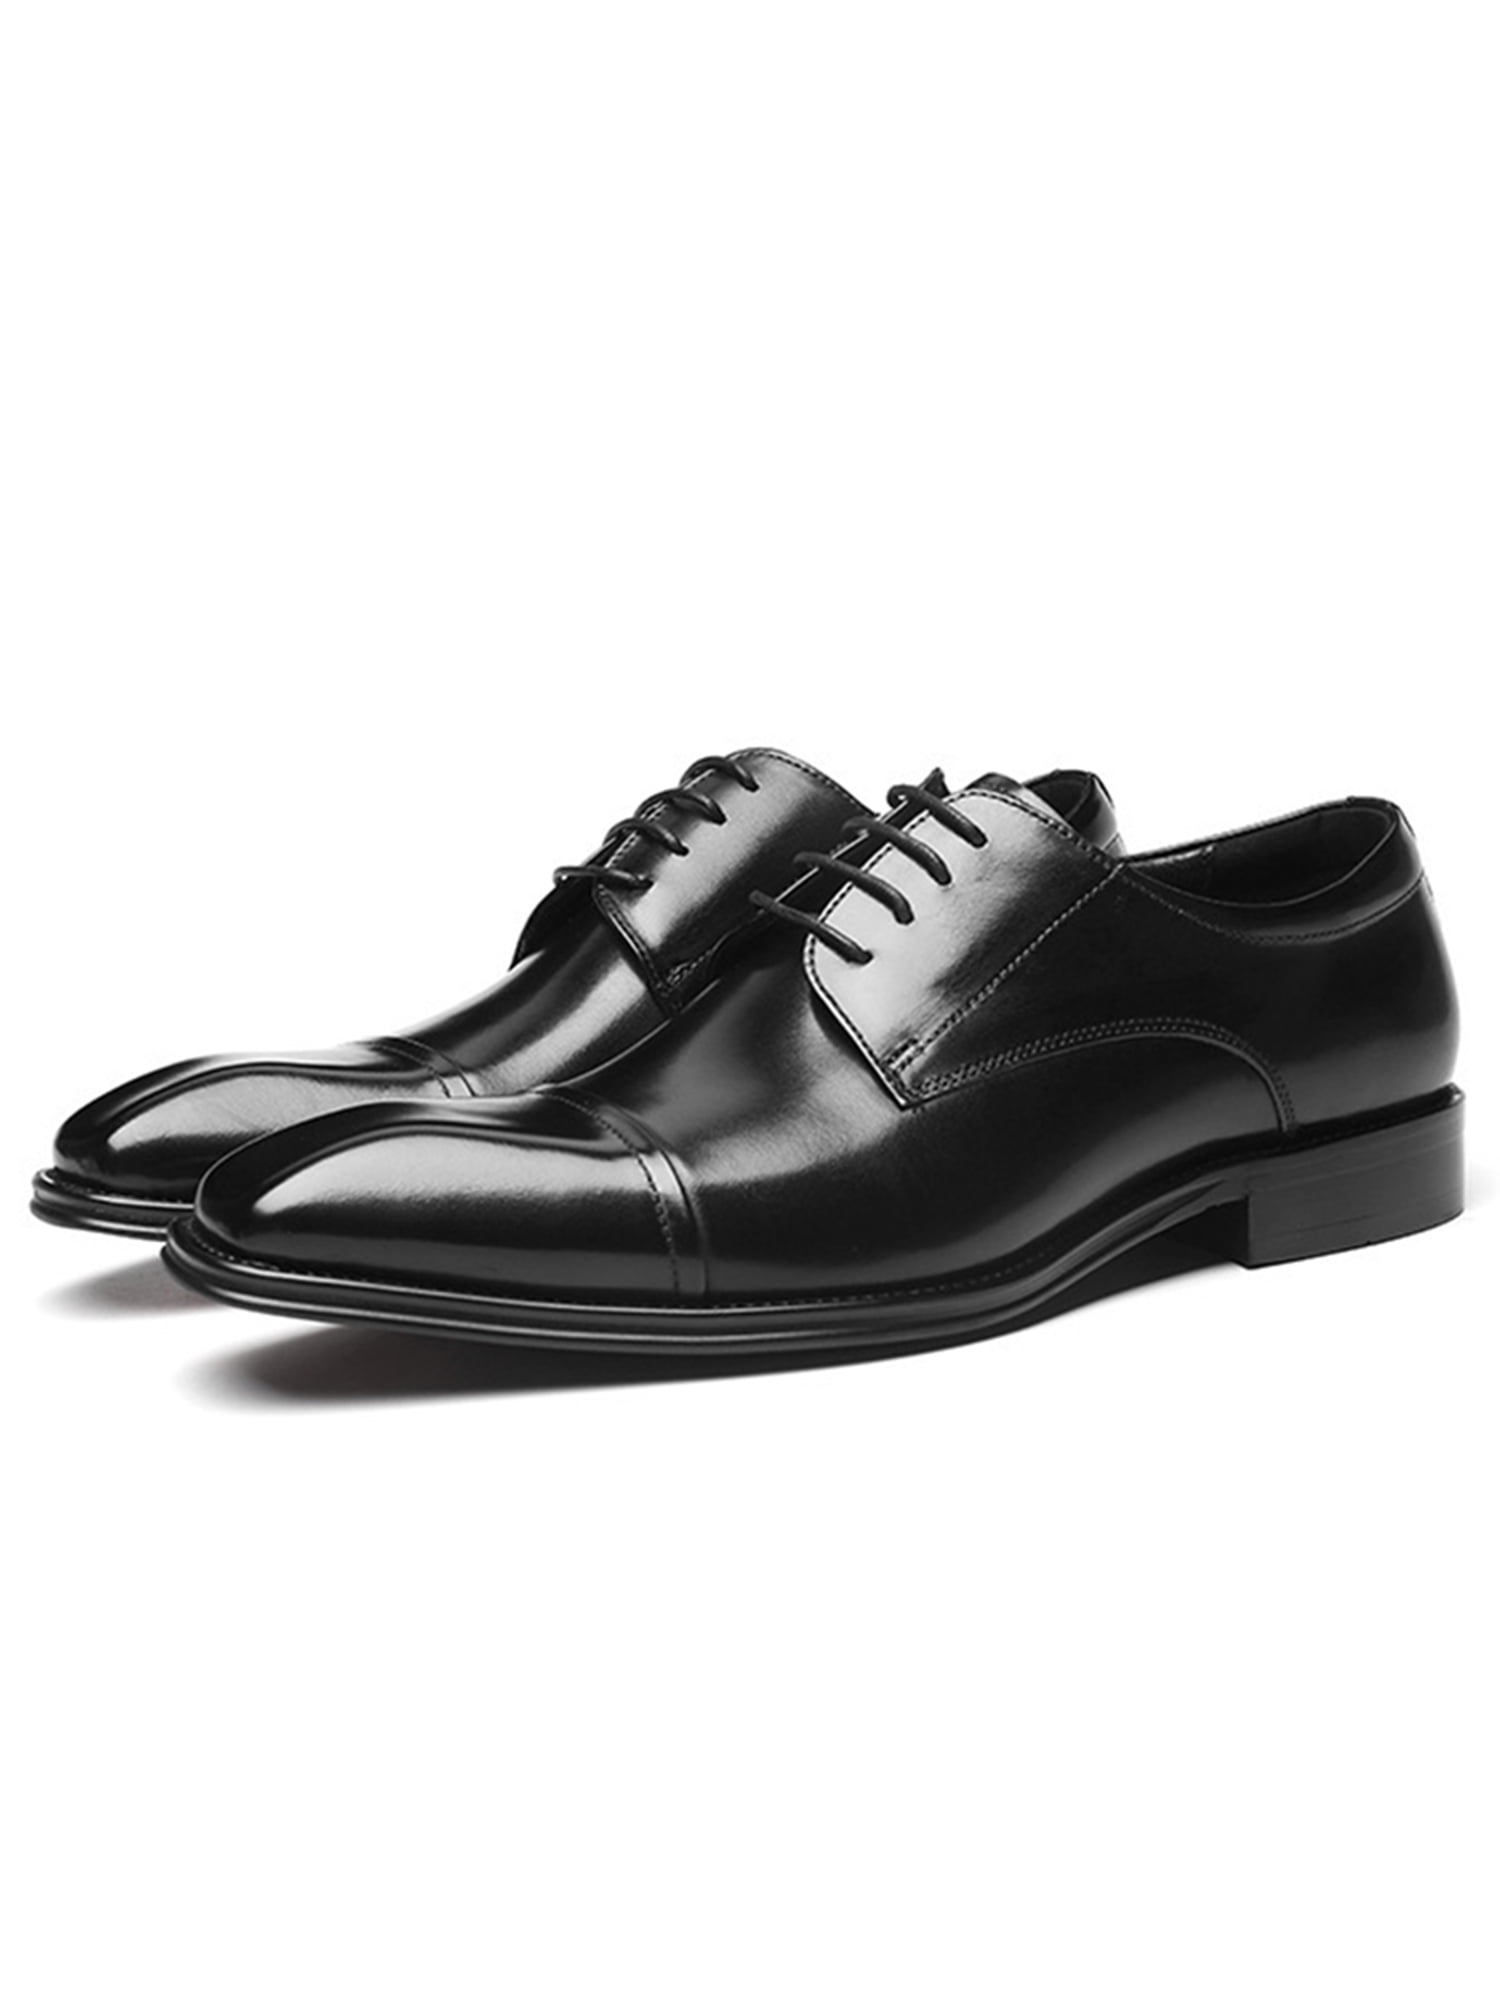 Daeful Men Oxfords Formal Leather Shoe Lace Up Dress Shoes Mens Non ...